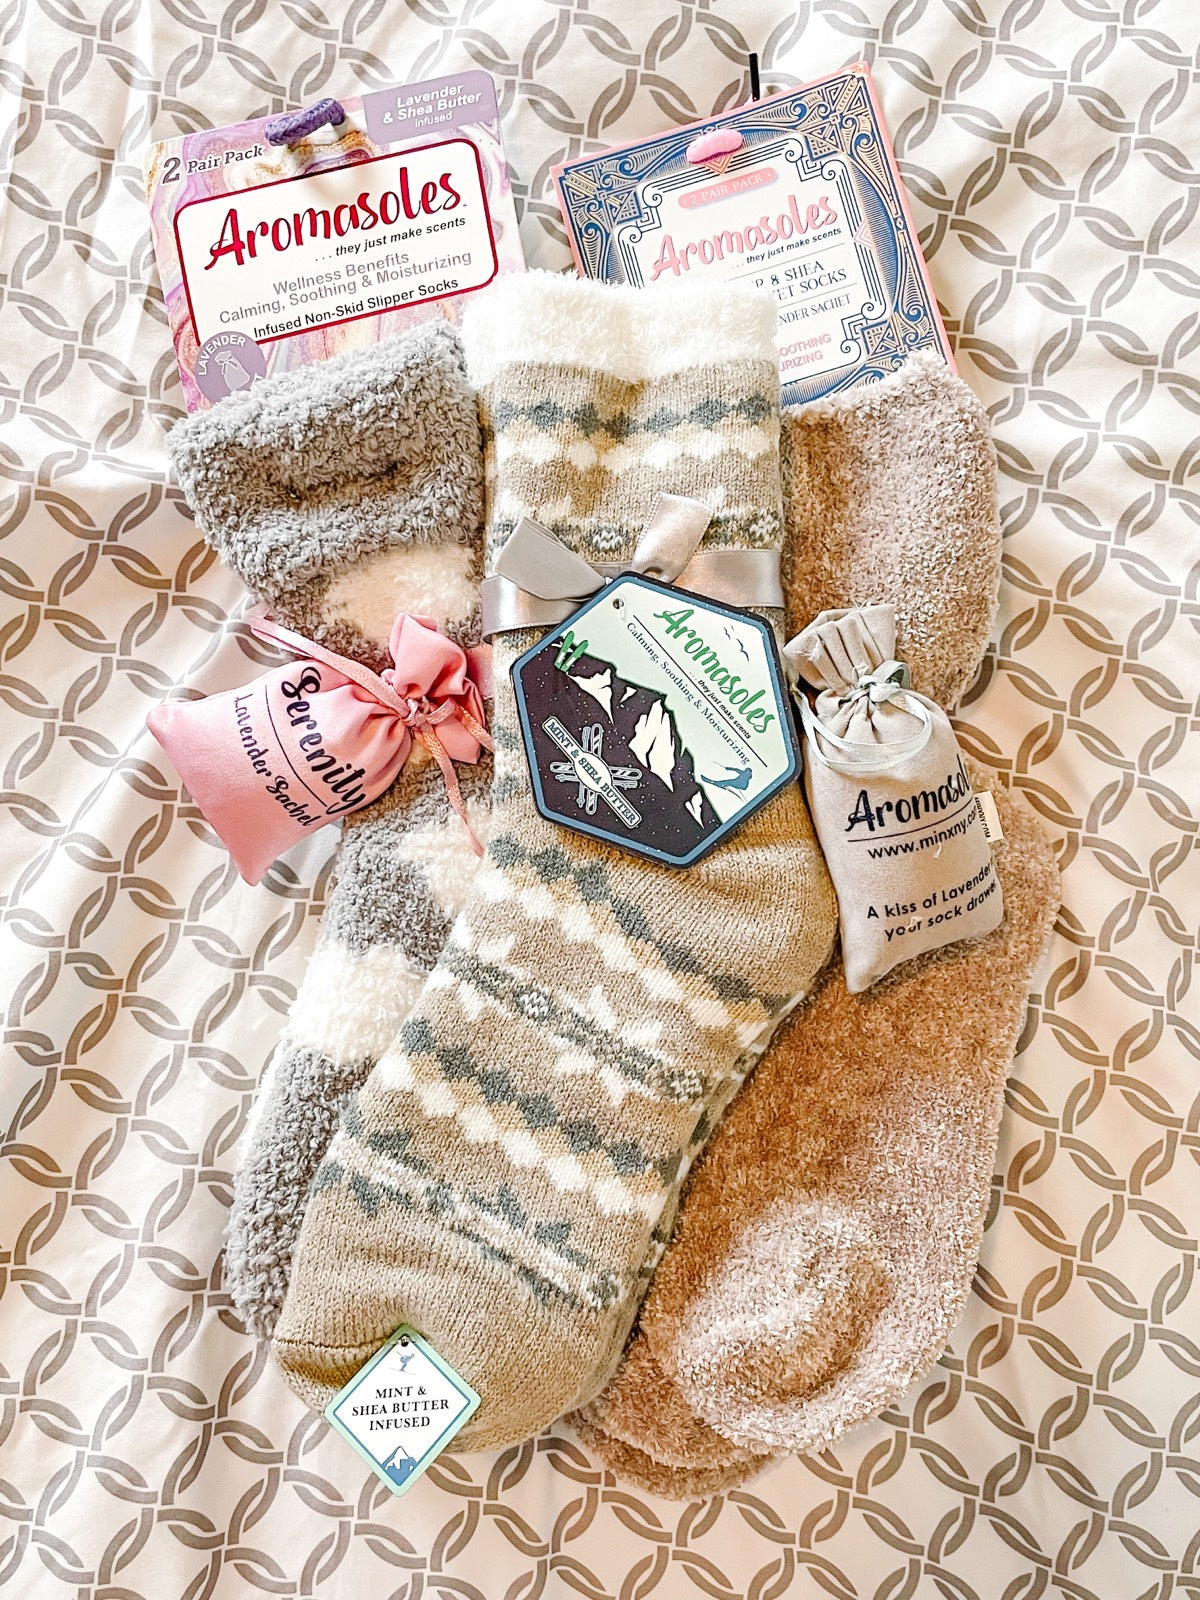 Big holiday savings!zanvin Women Winter Thick Slipper Socks With